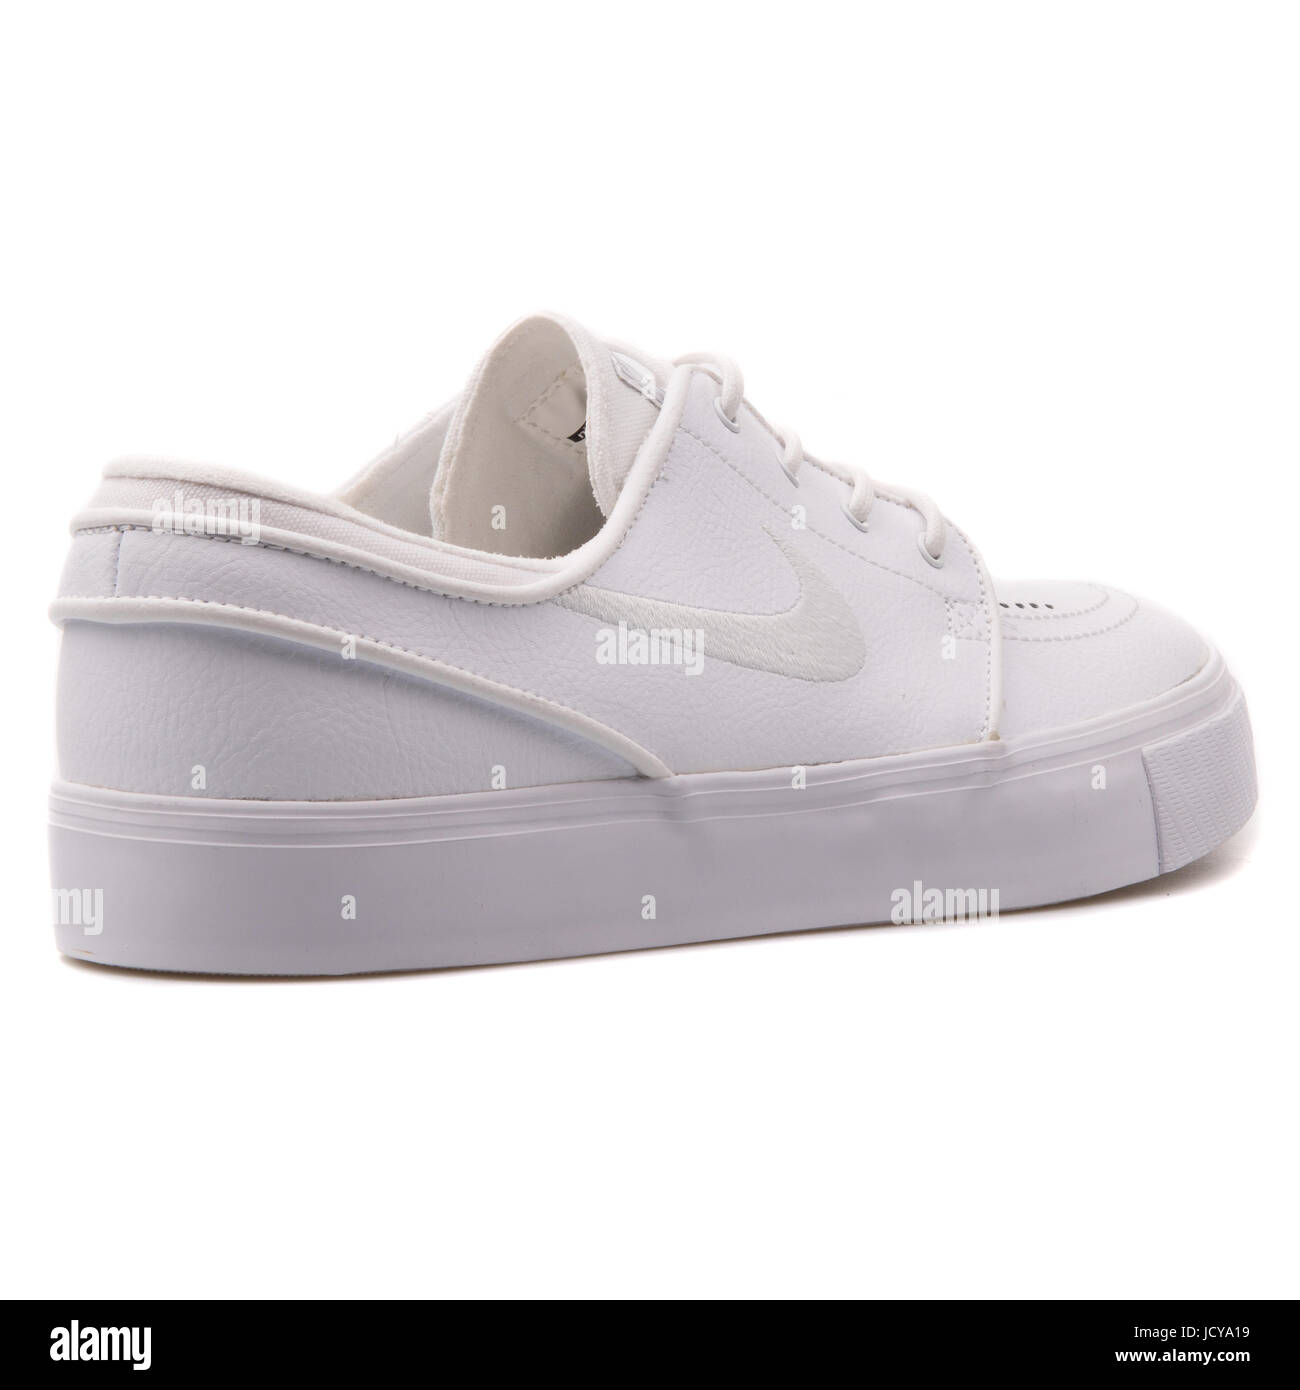 como resultado toque de múltiples fines Nike Zoom Stefan Janoski L White Leather Men's Skateboarding Shoes -  616490-110 Stock Photo - Alamy